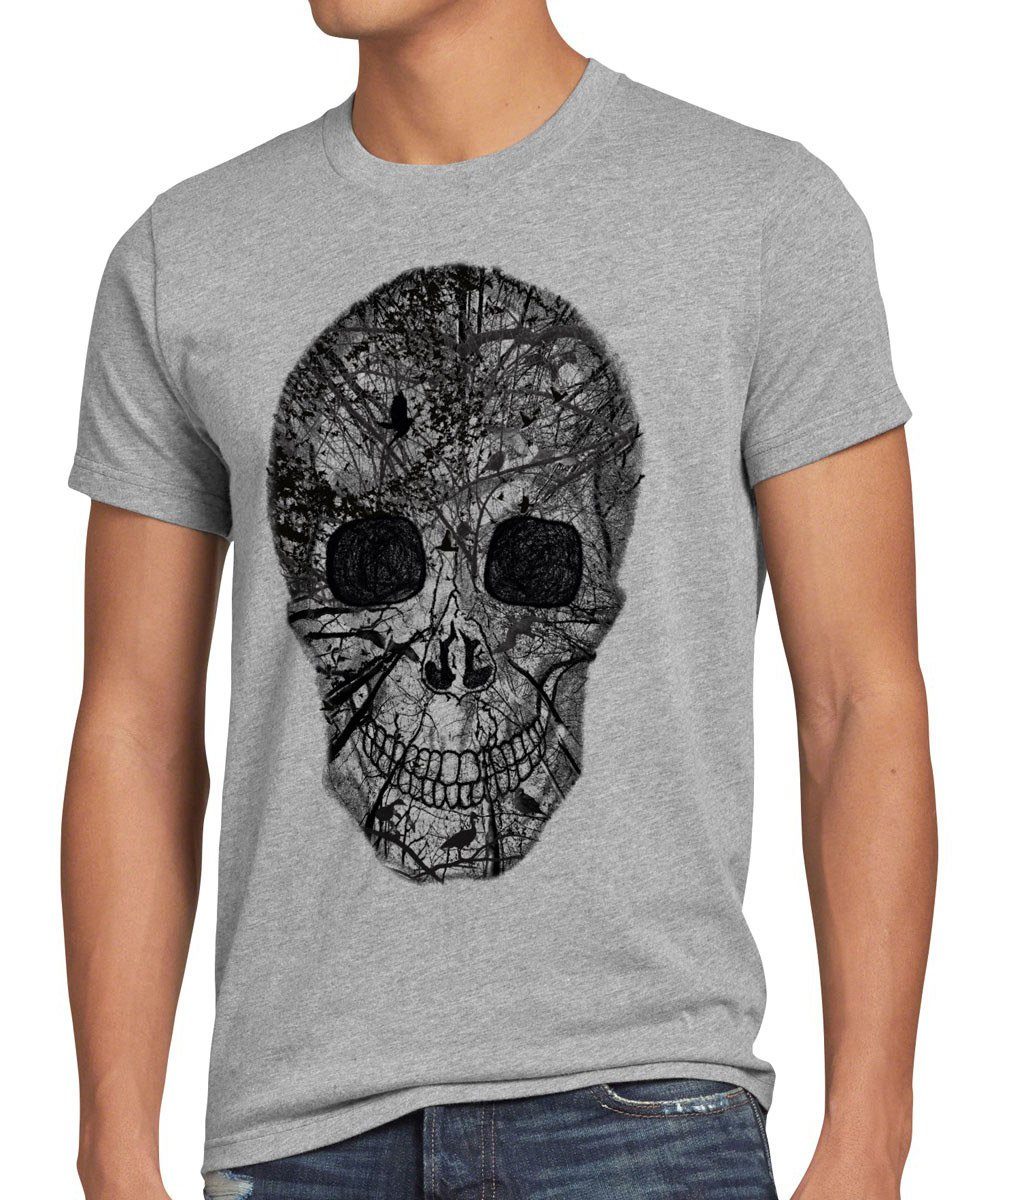 style3 Herren Skull Totenkopf Skelett horror club rocker kopchen us Print-Shirt meliert grau heavy T-Shirt biker